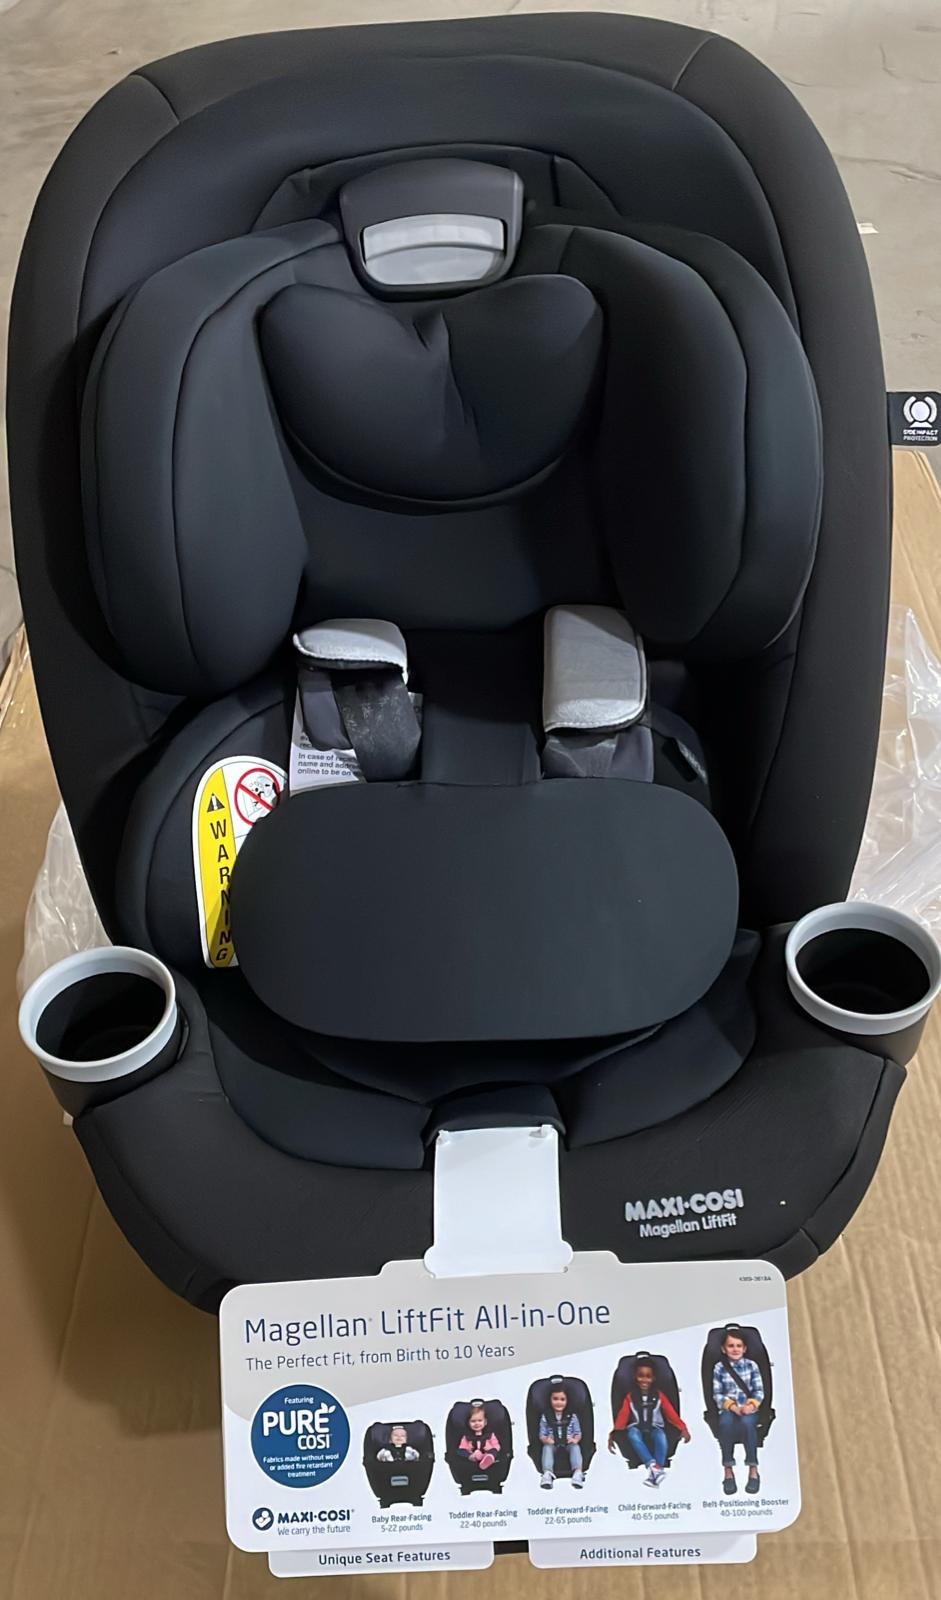 New Maxi-Cosi Magellan LiftFit All-in-One Convertible Car Seat (Essential Black)